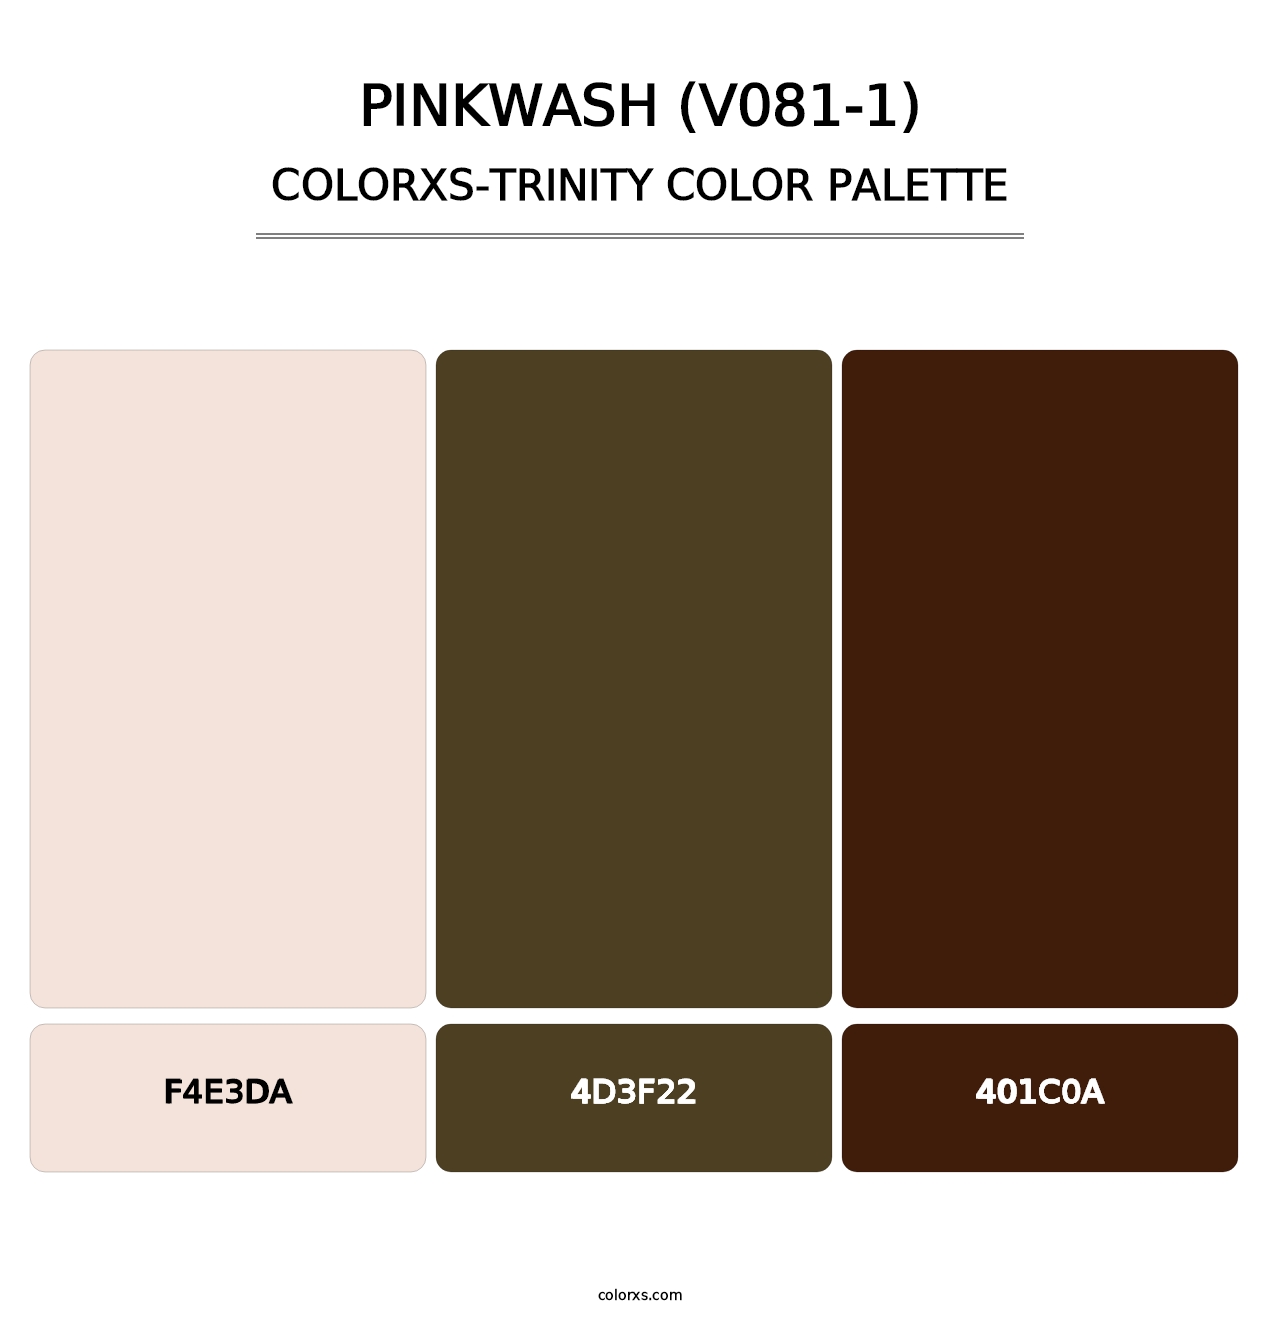 Pinkwash (V081-1) - Colorxs Trinity Palette